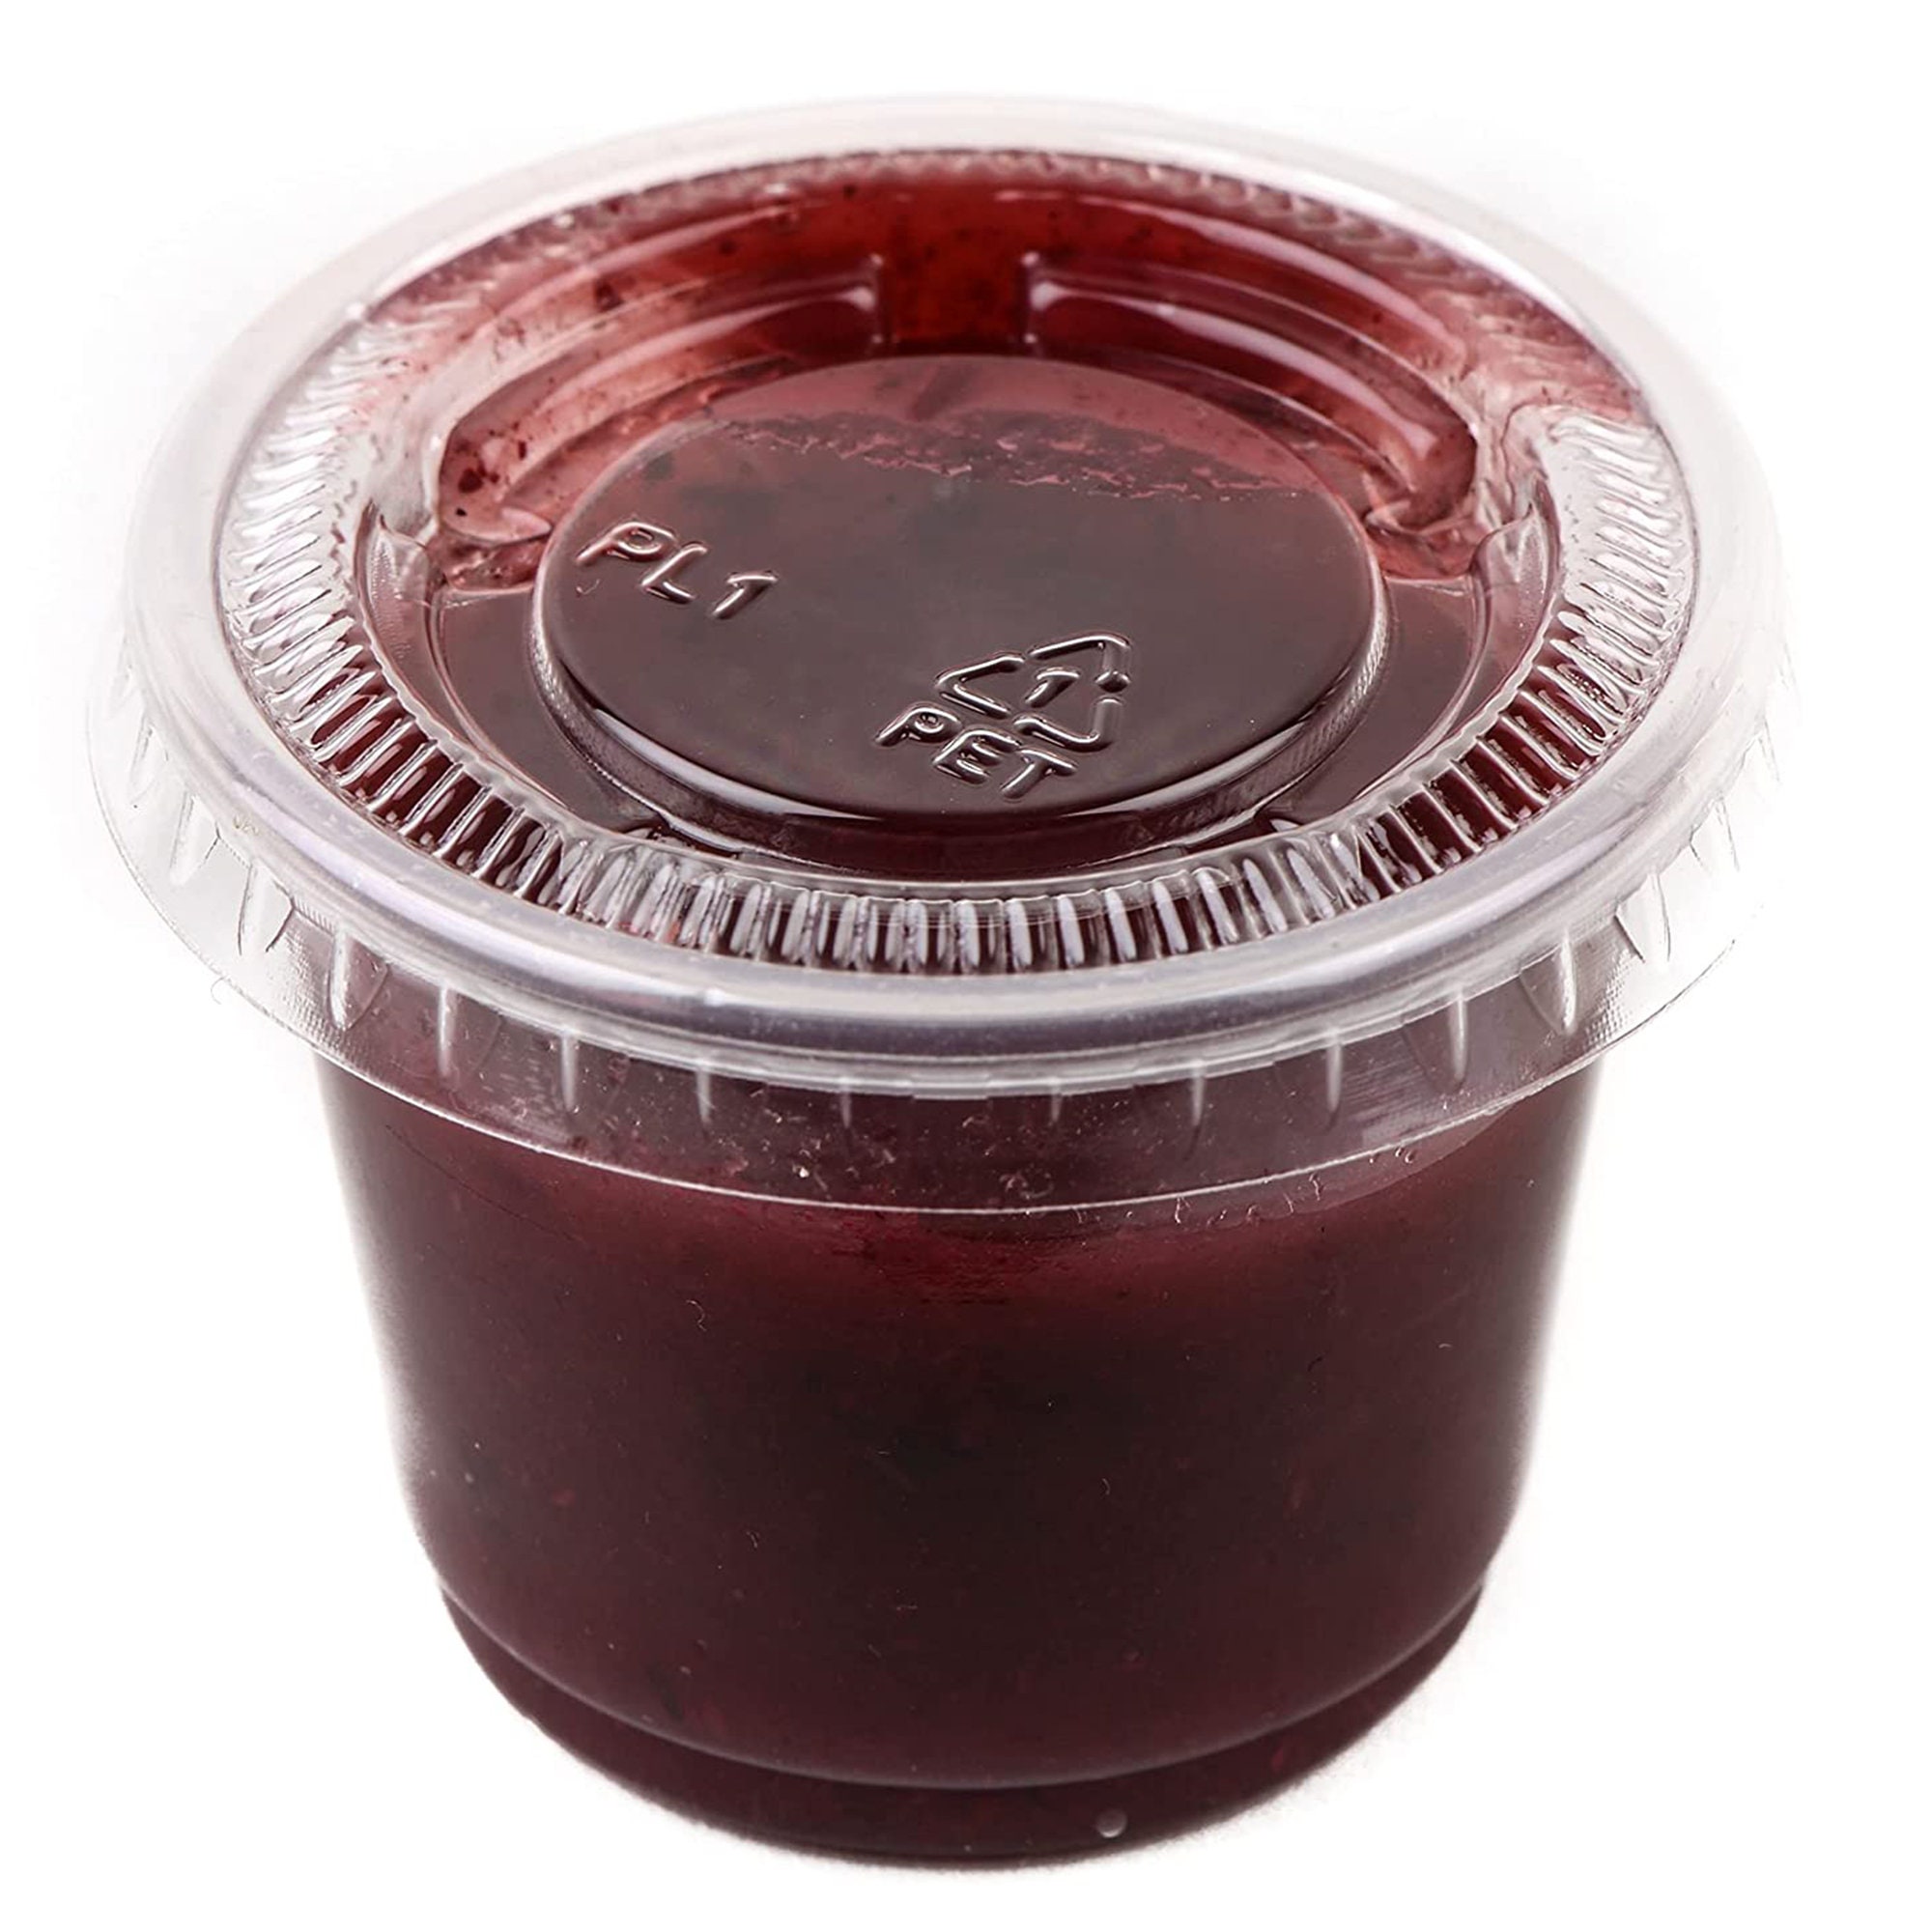 1.3 Gallon (166 oz) BPA Free Food Grade Round Container (T811166